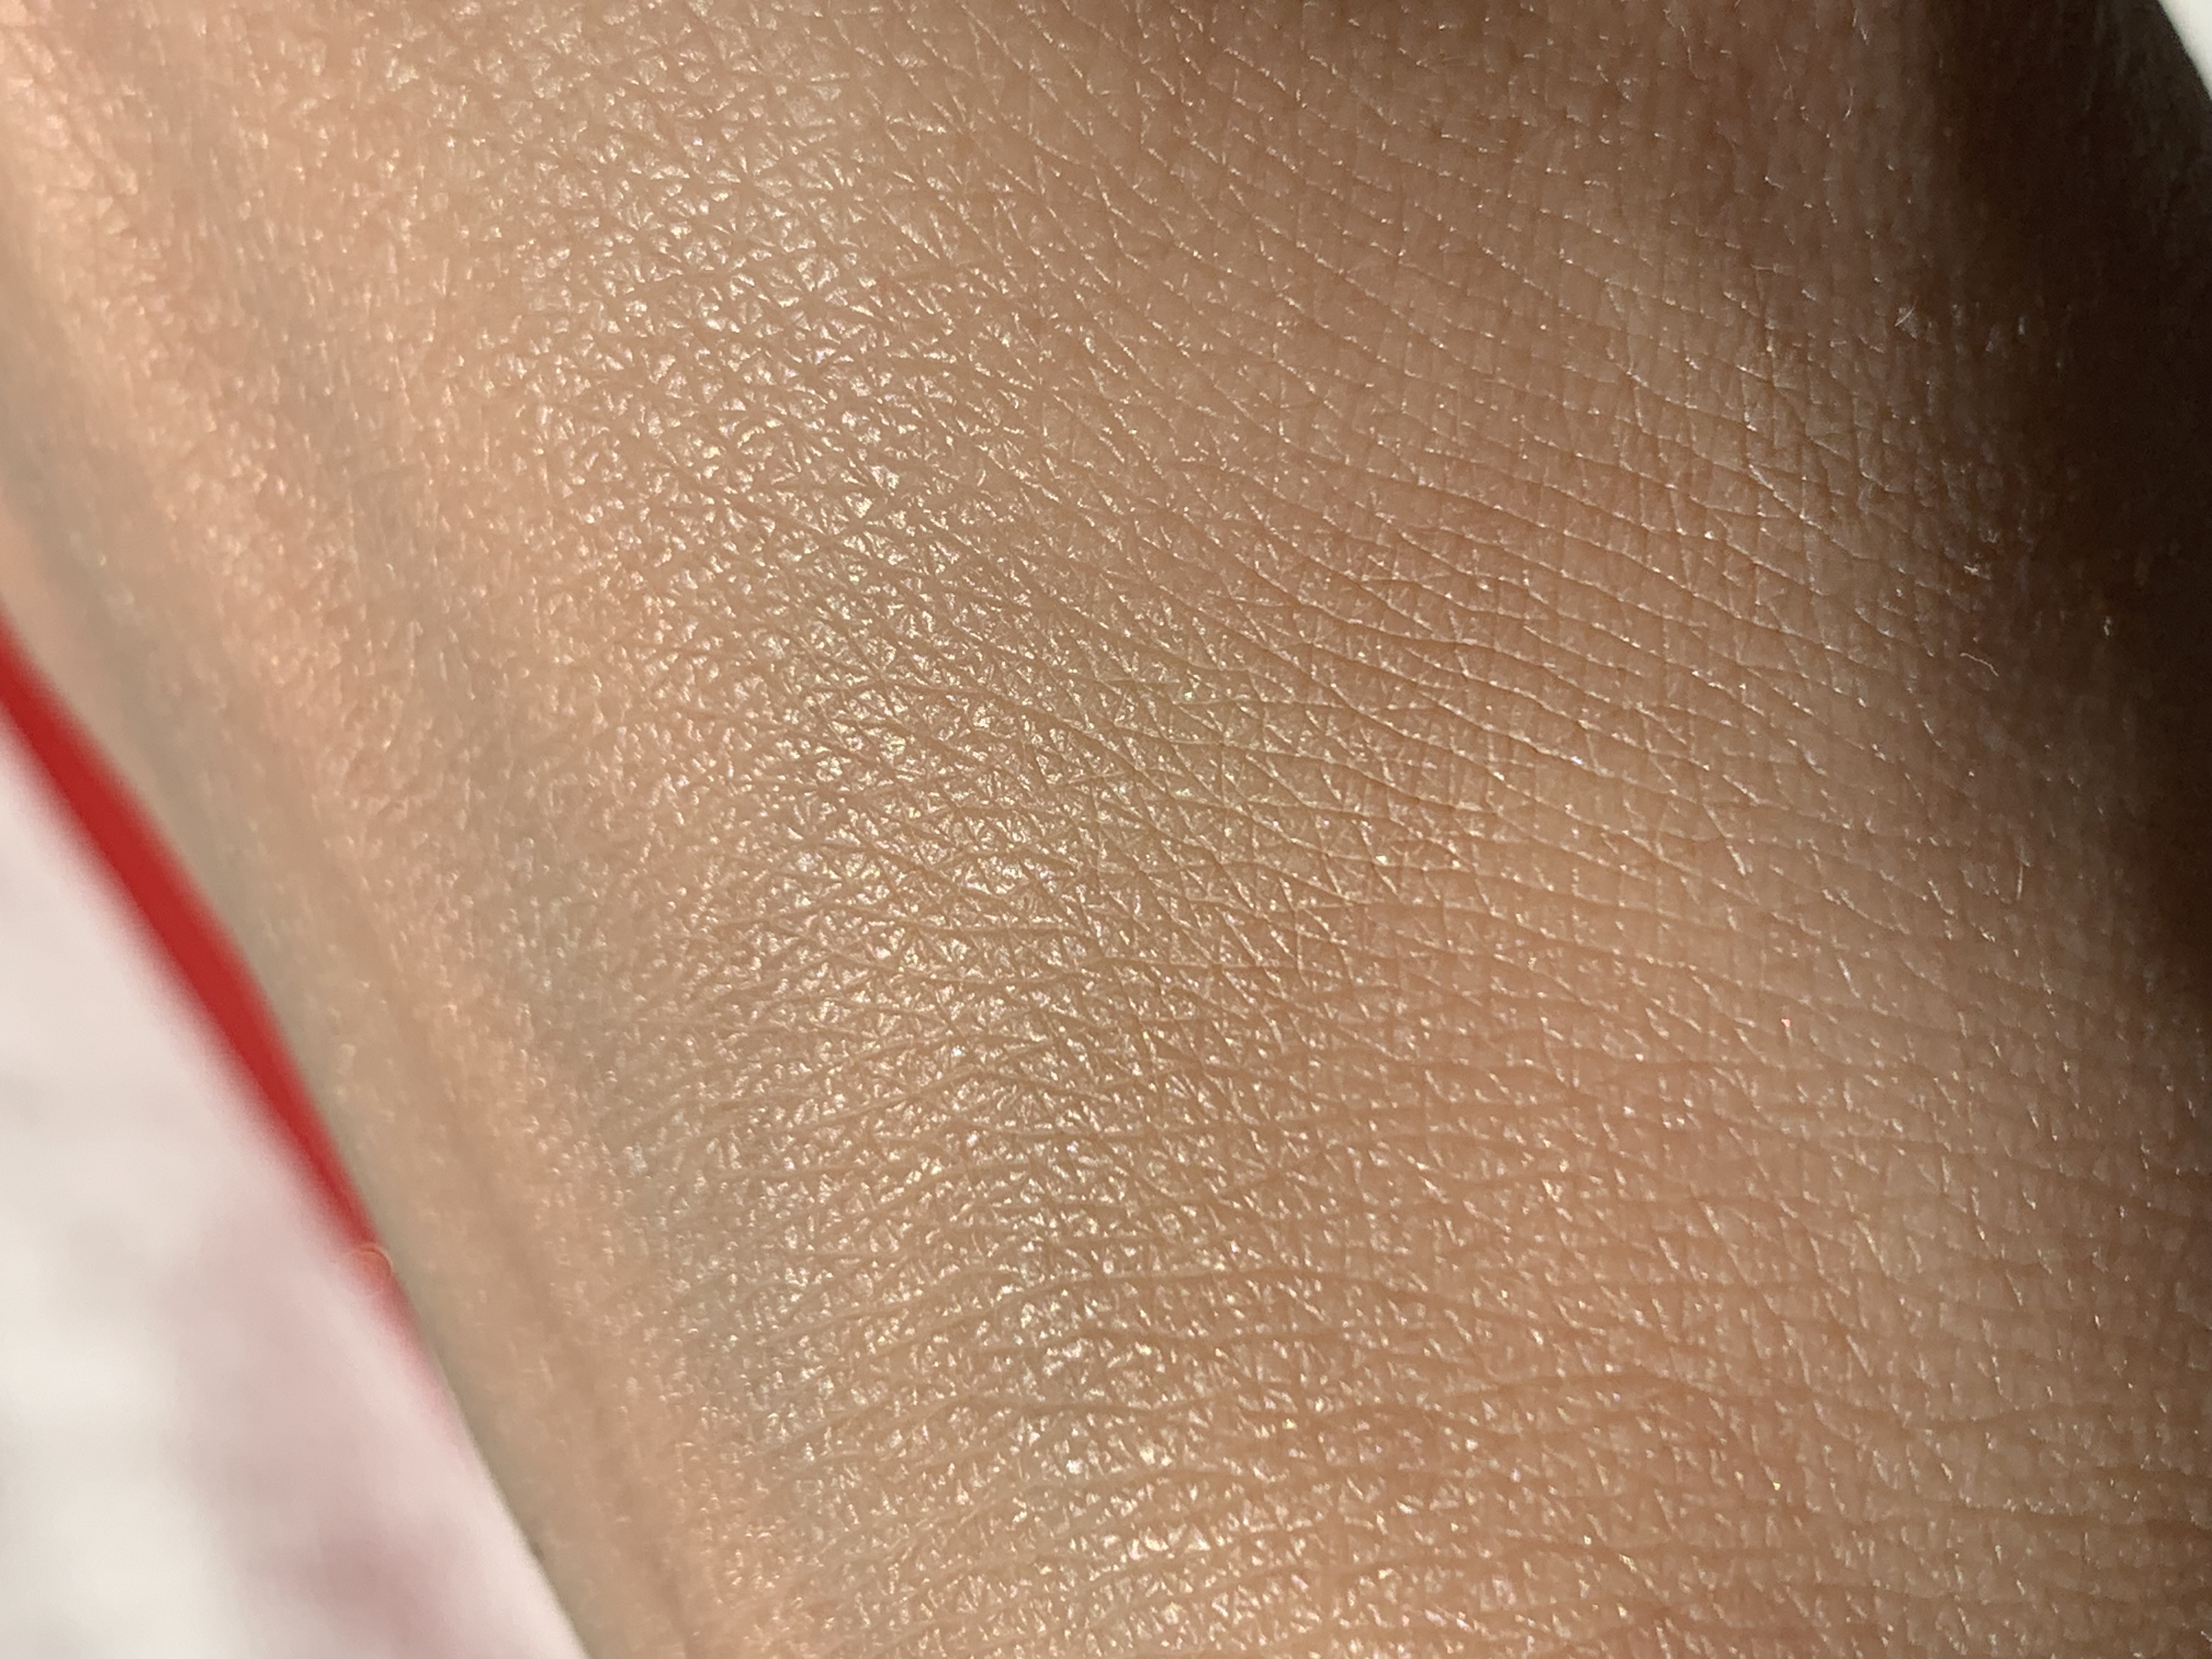 Shiseido Synchro Skin Glow Luminizing Fluid Foundation розяснюючий тональний крем SPF 20